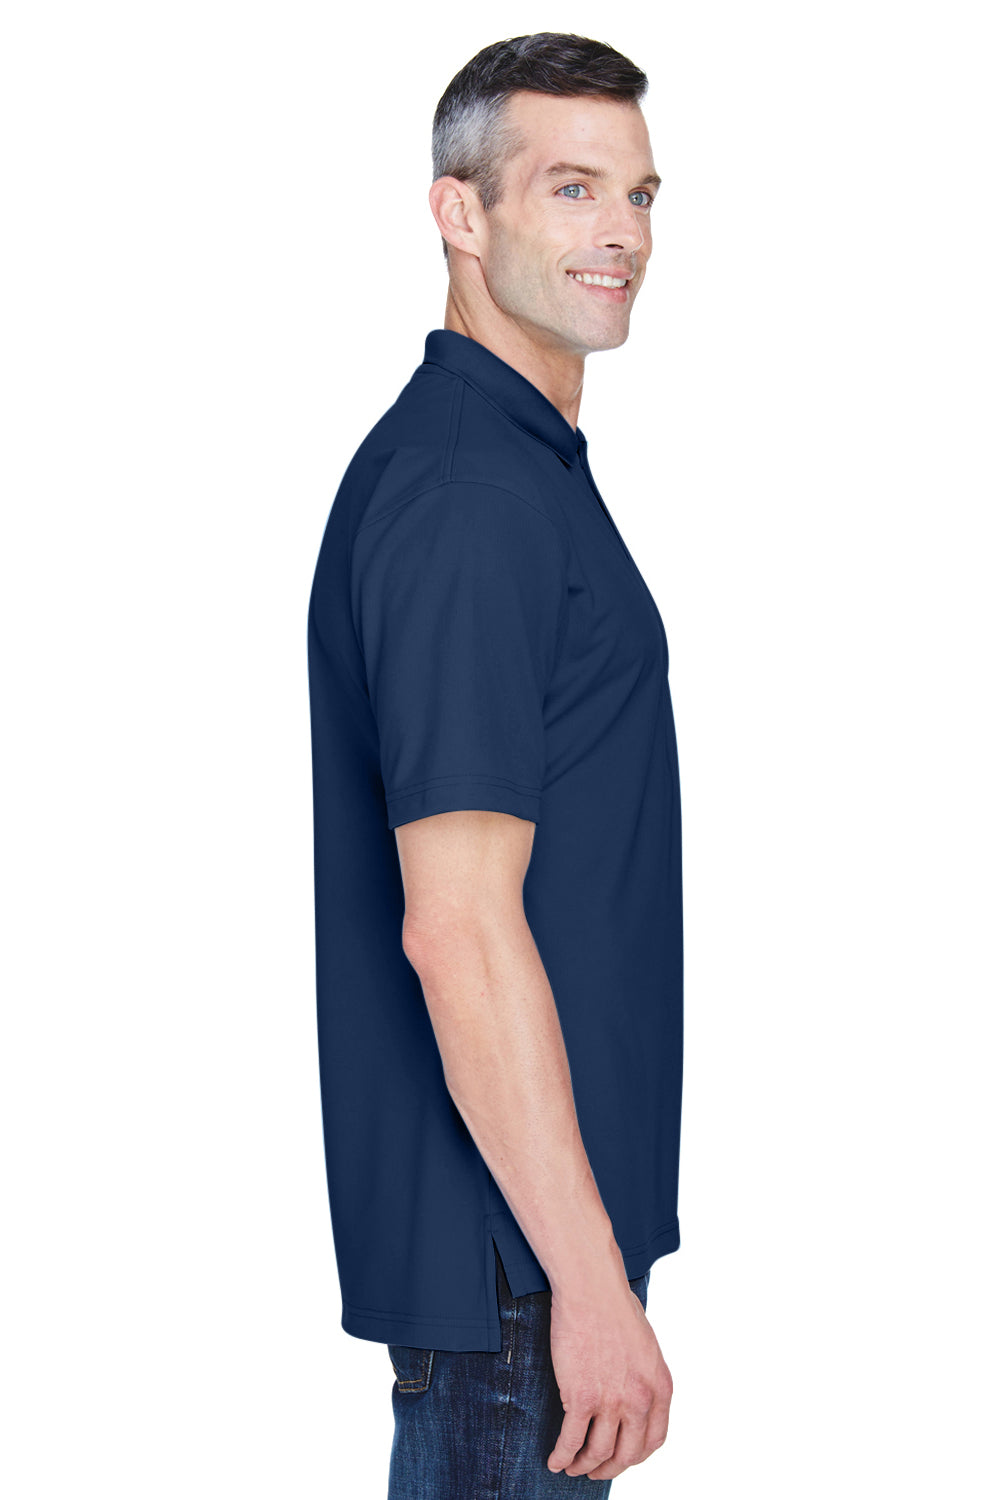 UltraClub 8445 Mens Cool & Dry Performance Moisture Wicking Short Sleeve Polo Shirt Navy Blue Side